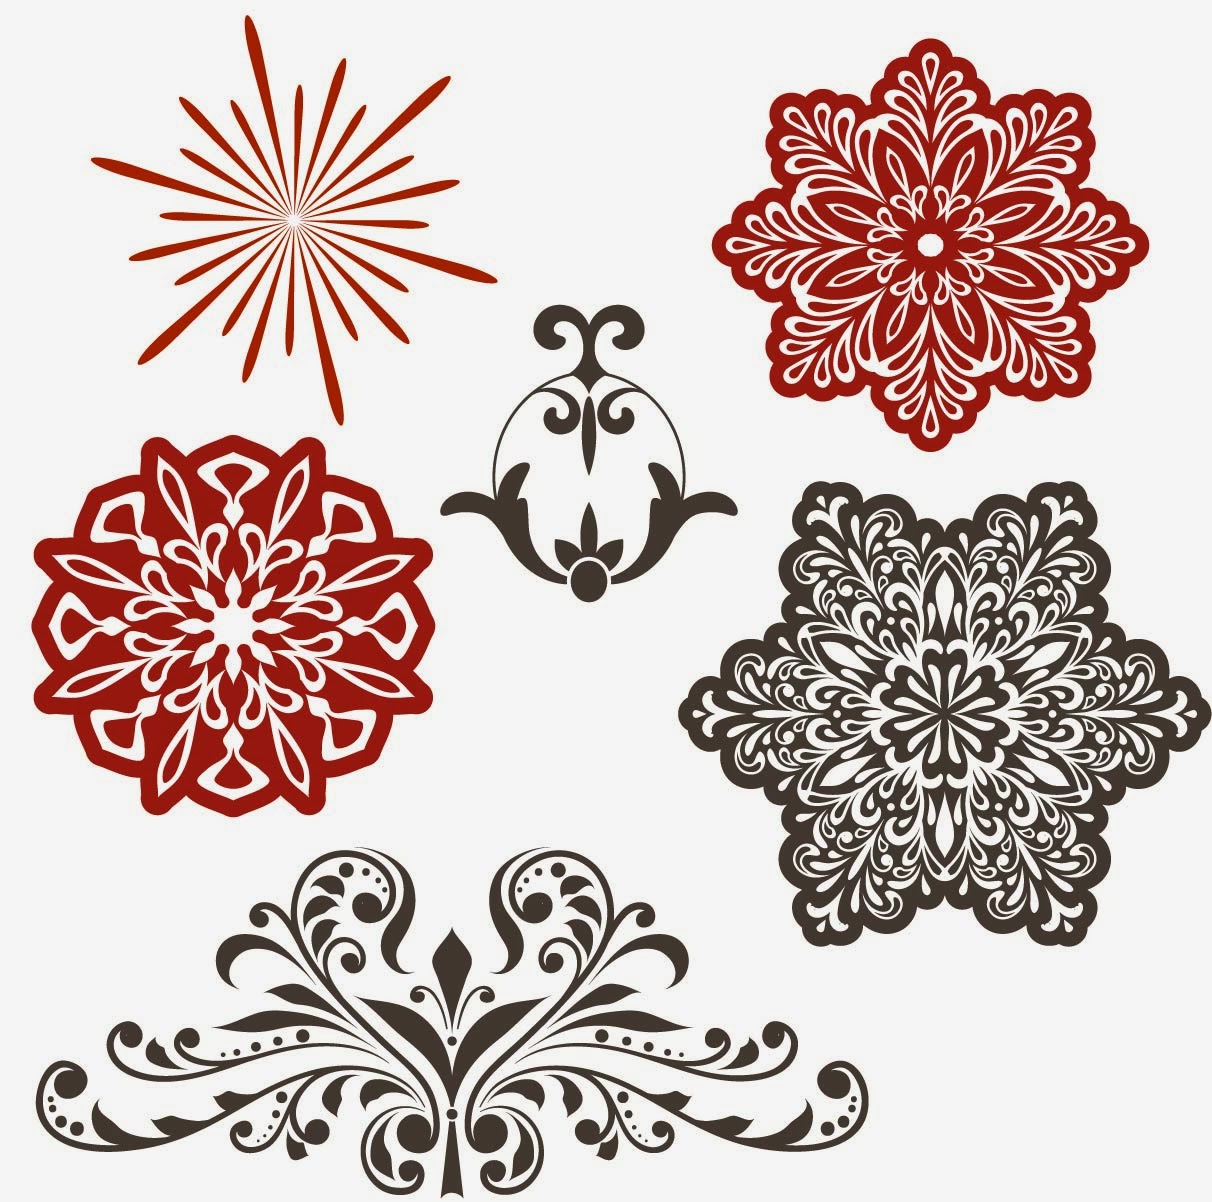 Free Christmas Decorative Designs Elements Vector Clip Art Download